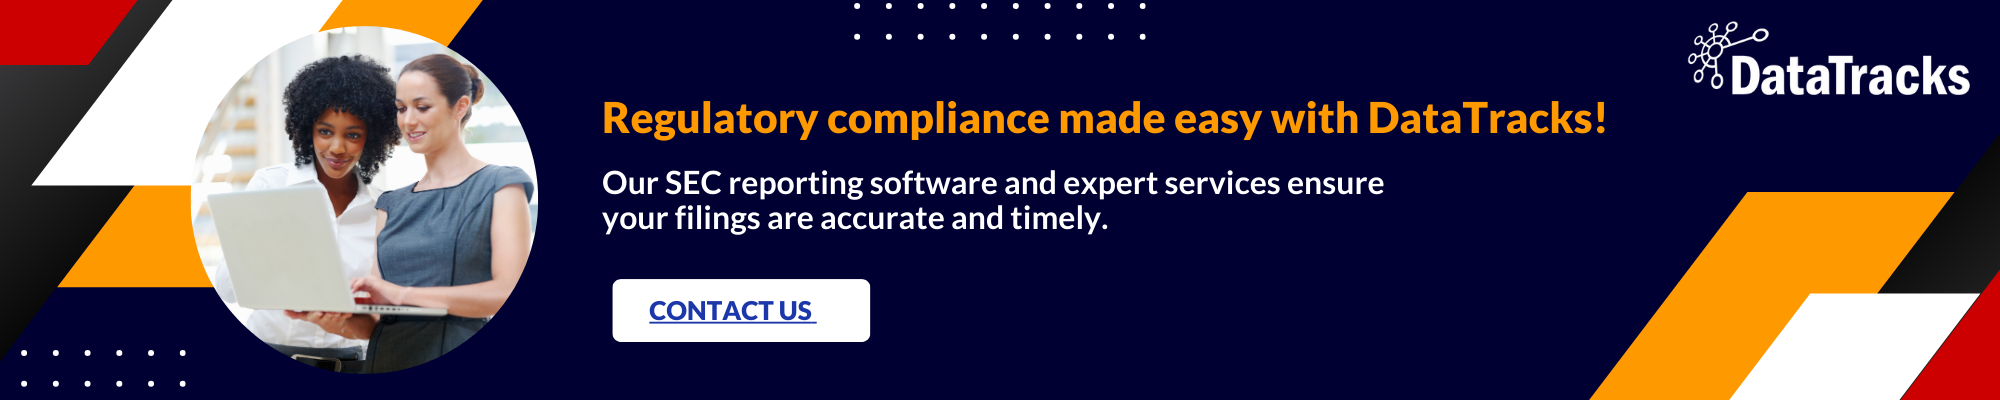 SEC reporting software - Datatracks- Contact us